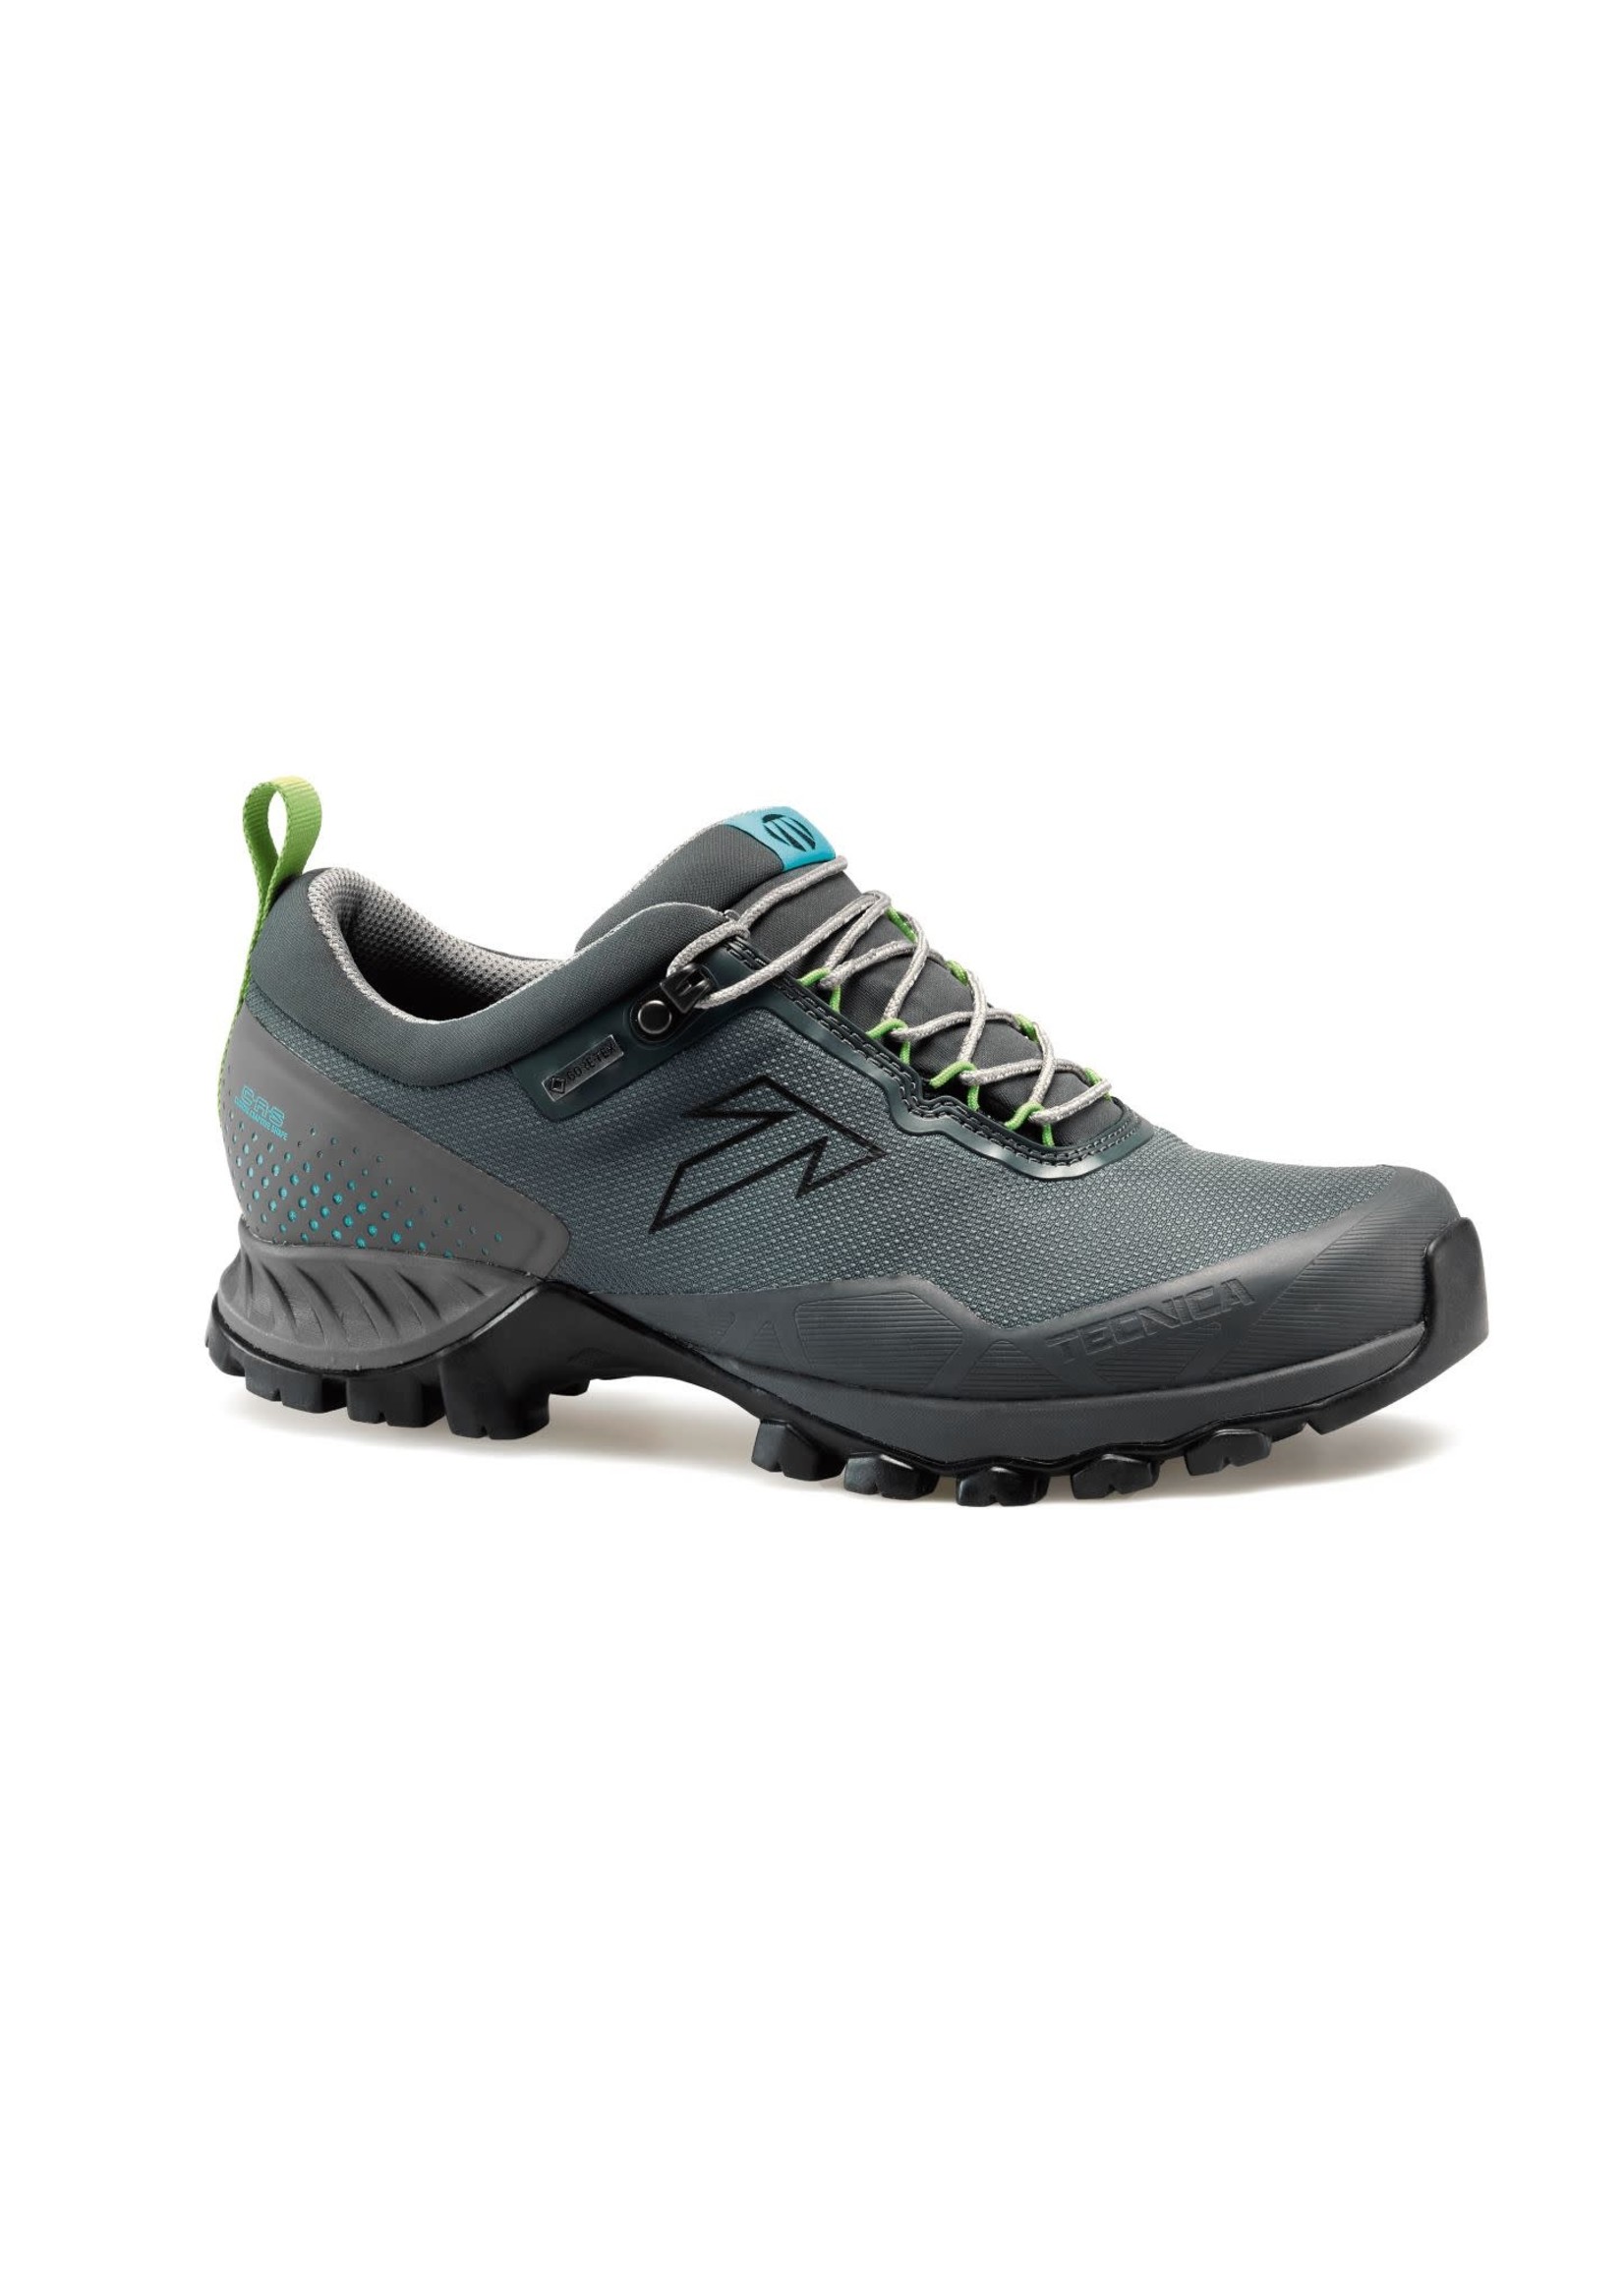 Tecnica Plasma S GTX Hiking Shoe - Women | Vertical Addiction ...